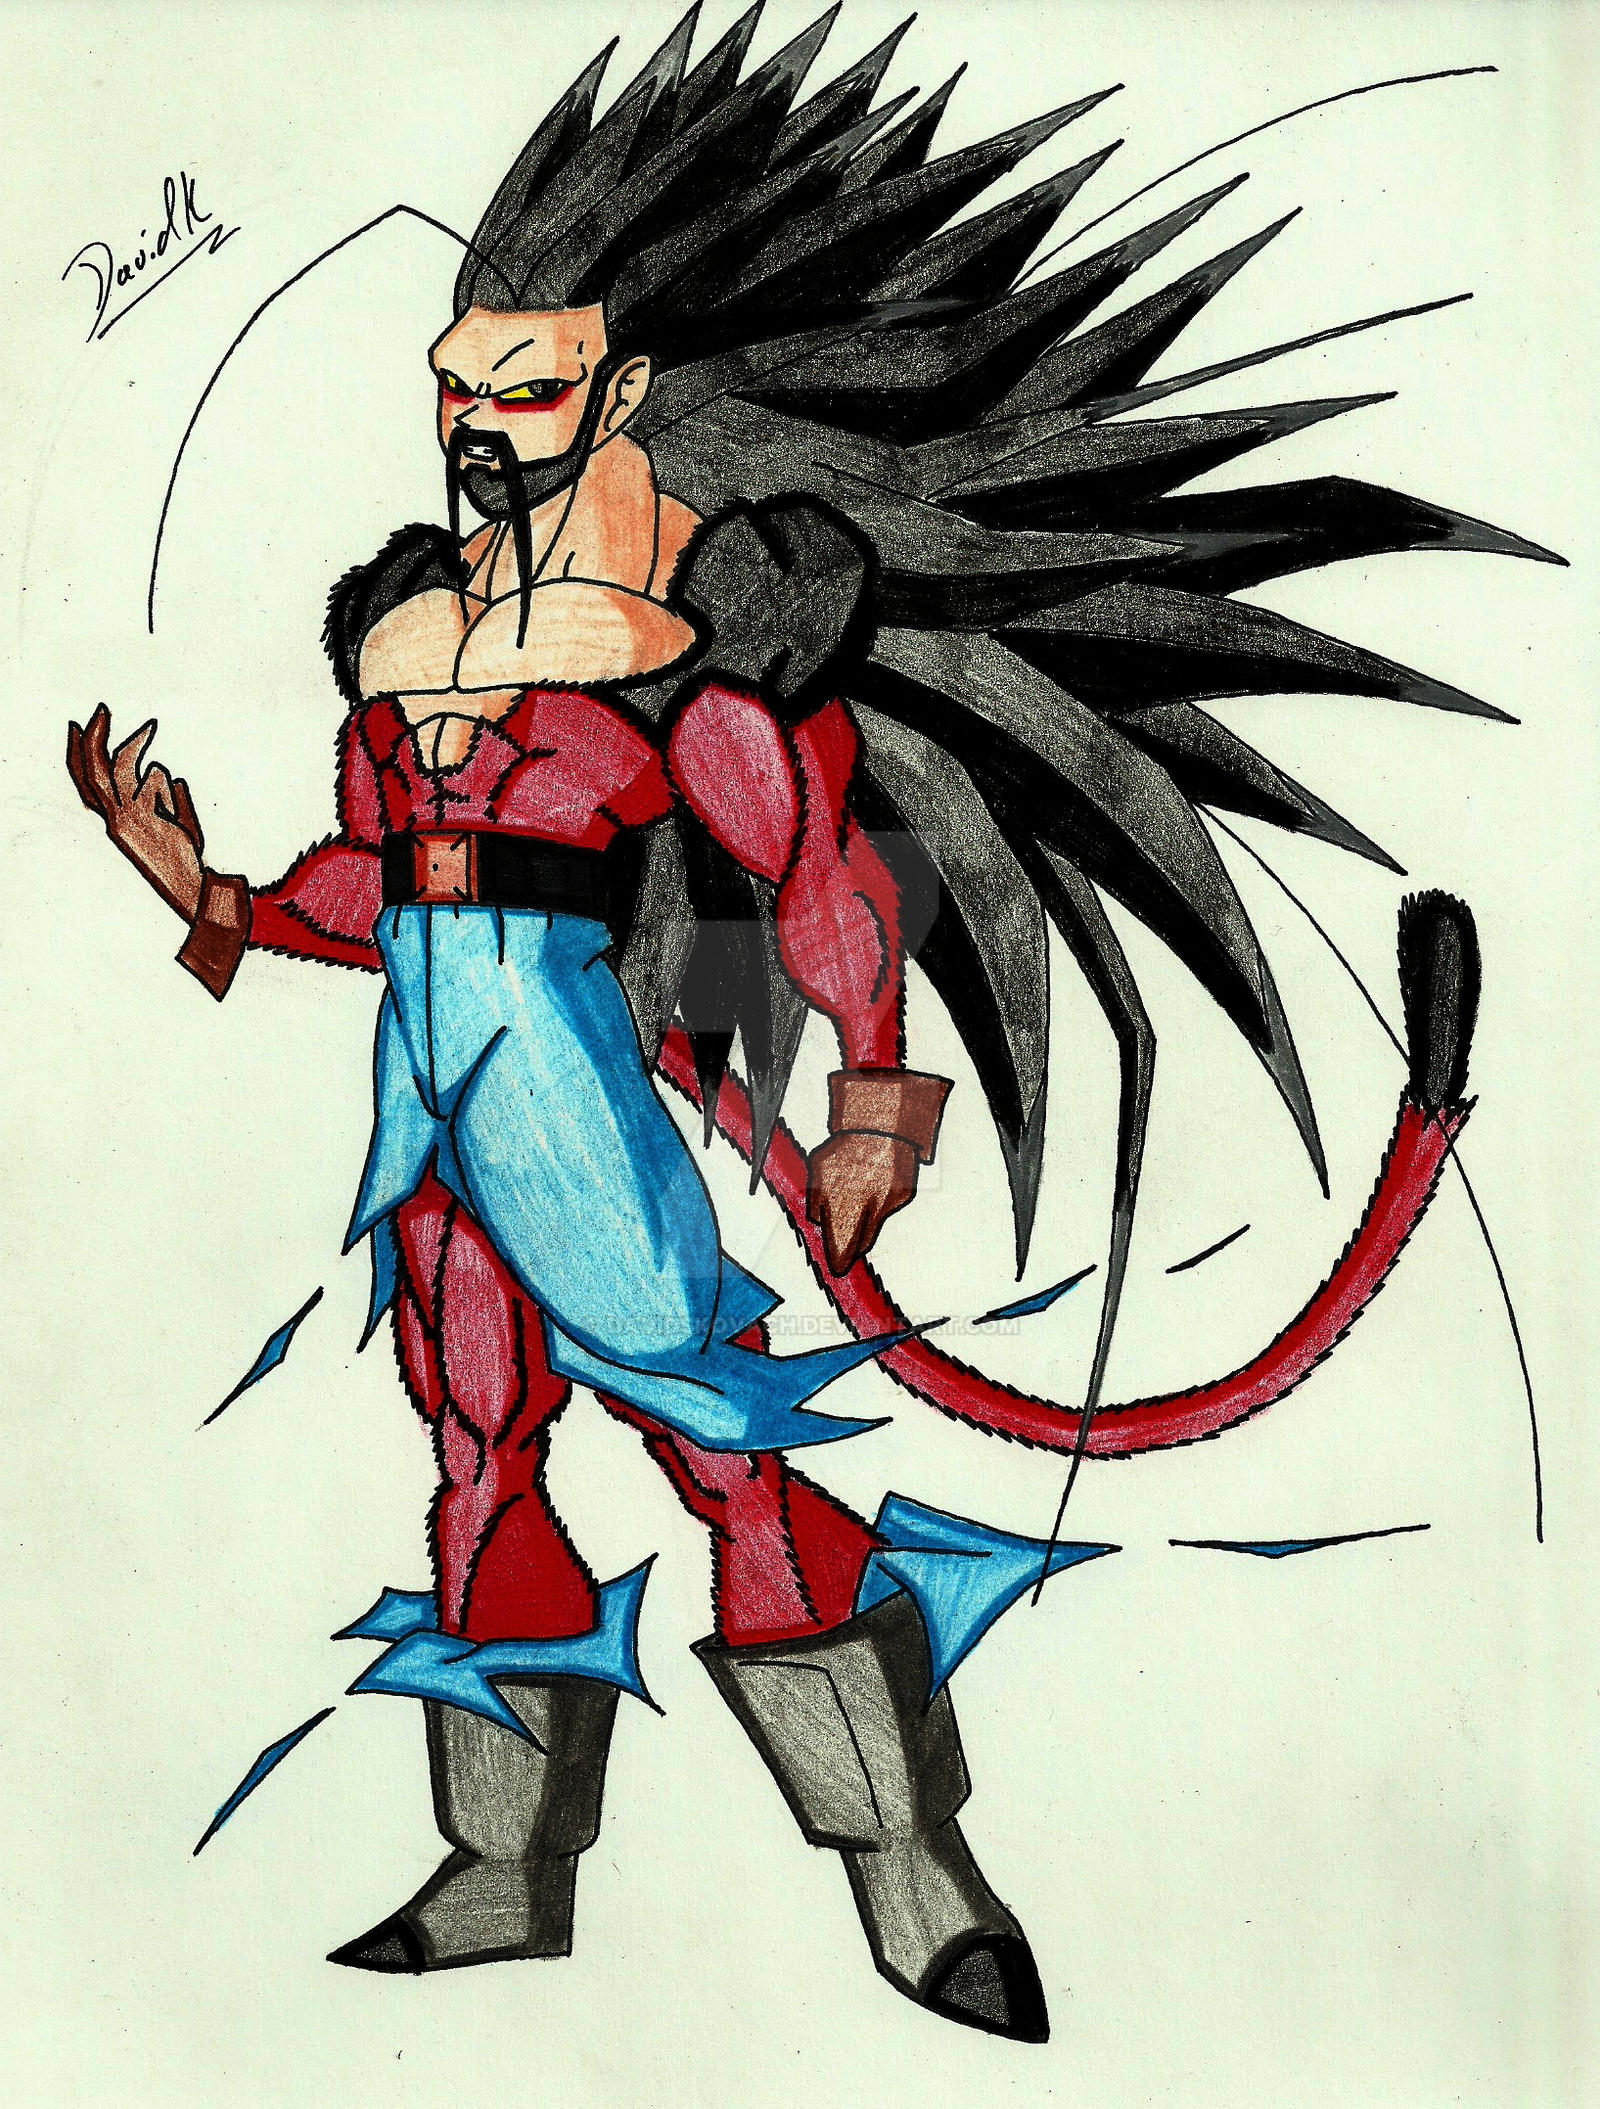 Ascended Super Saiyan 5: Goku by oscar-aburto on DeviantArt